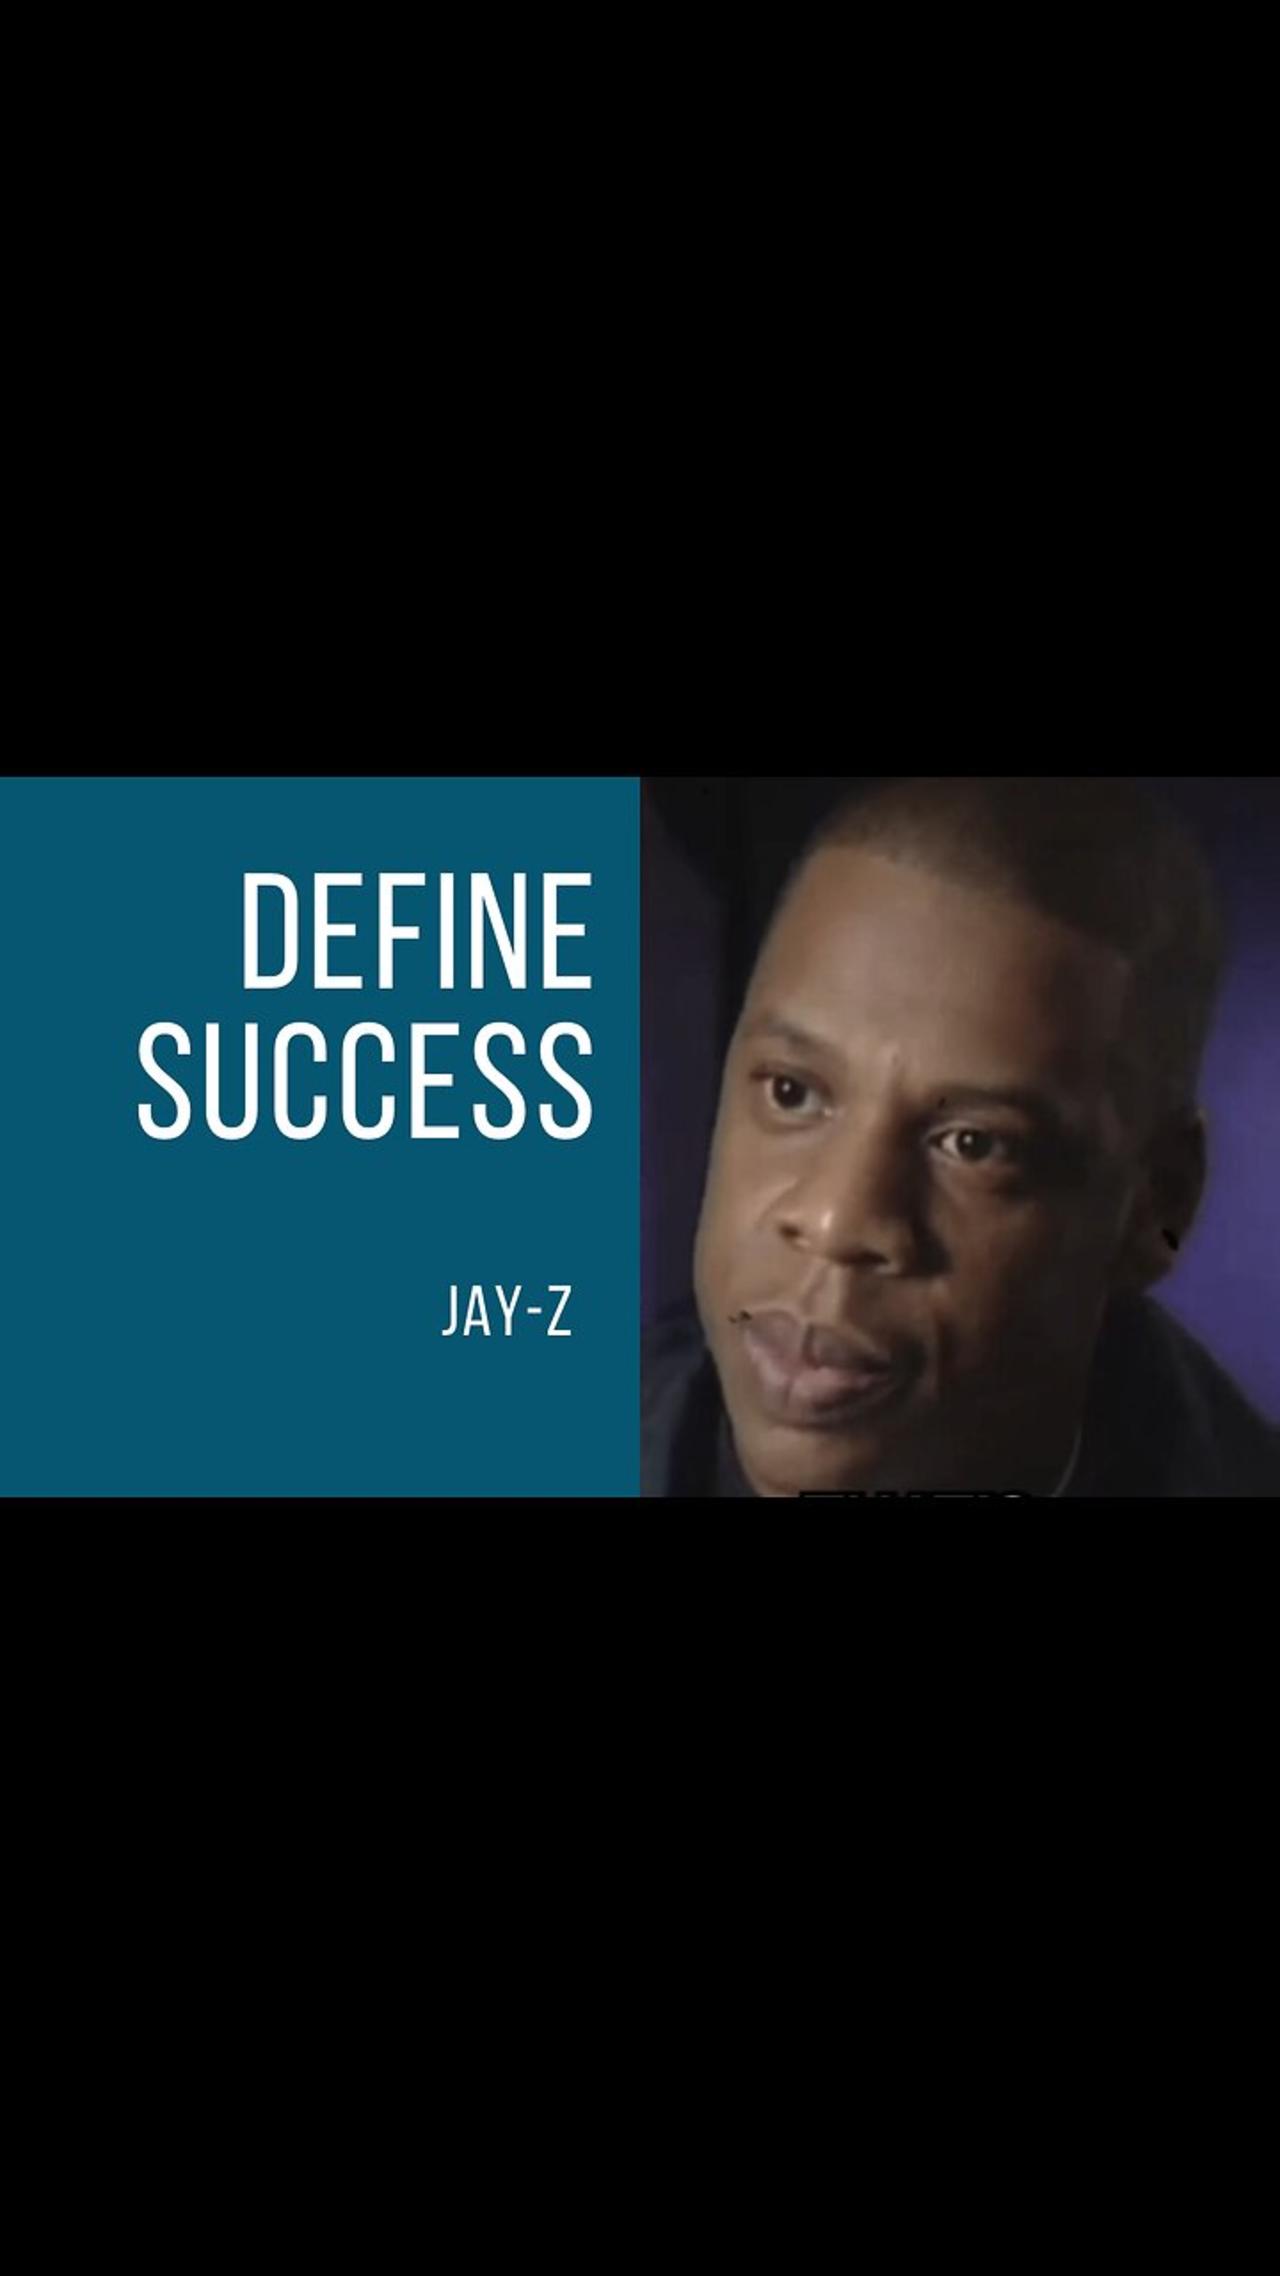 Jay-Z | How do you define success?